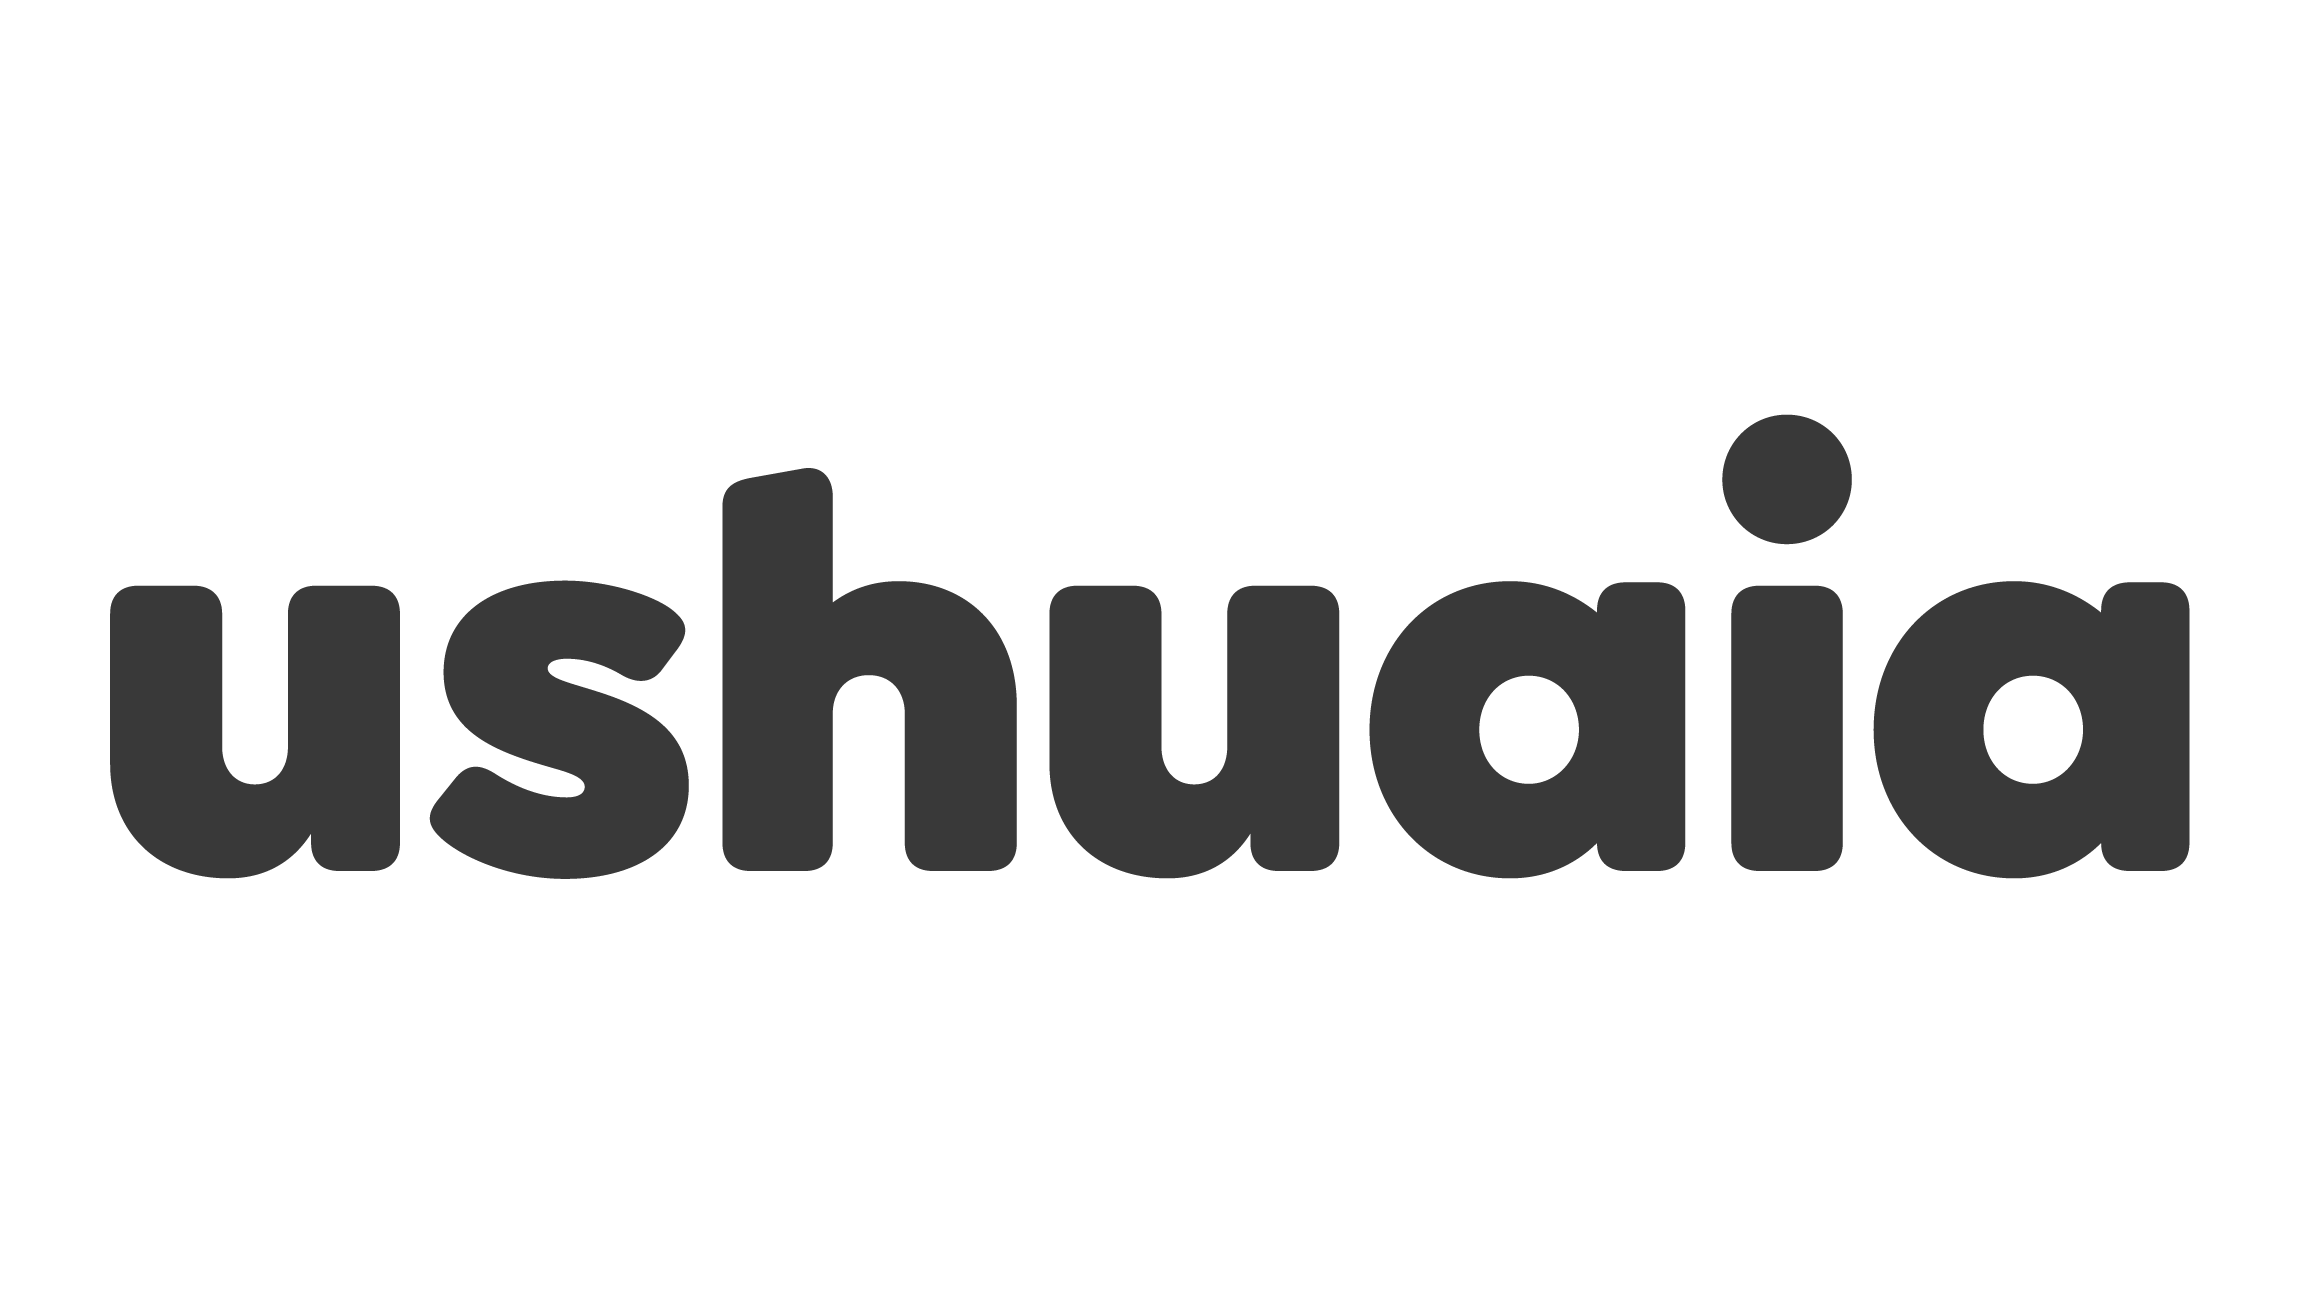 Ushuaia Solutions